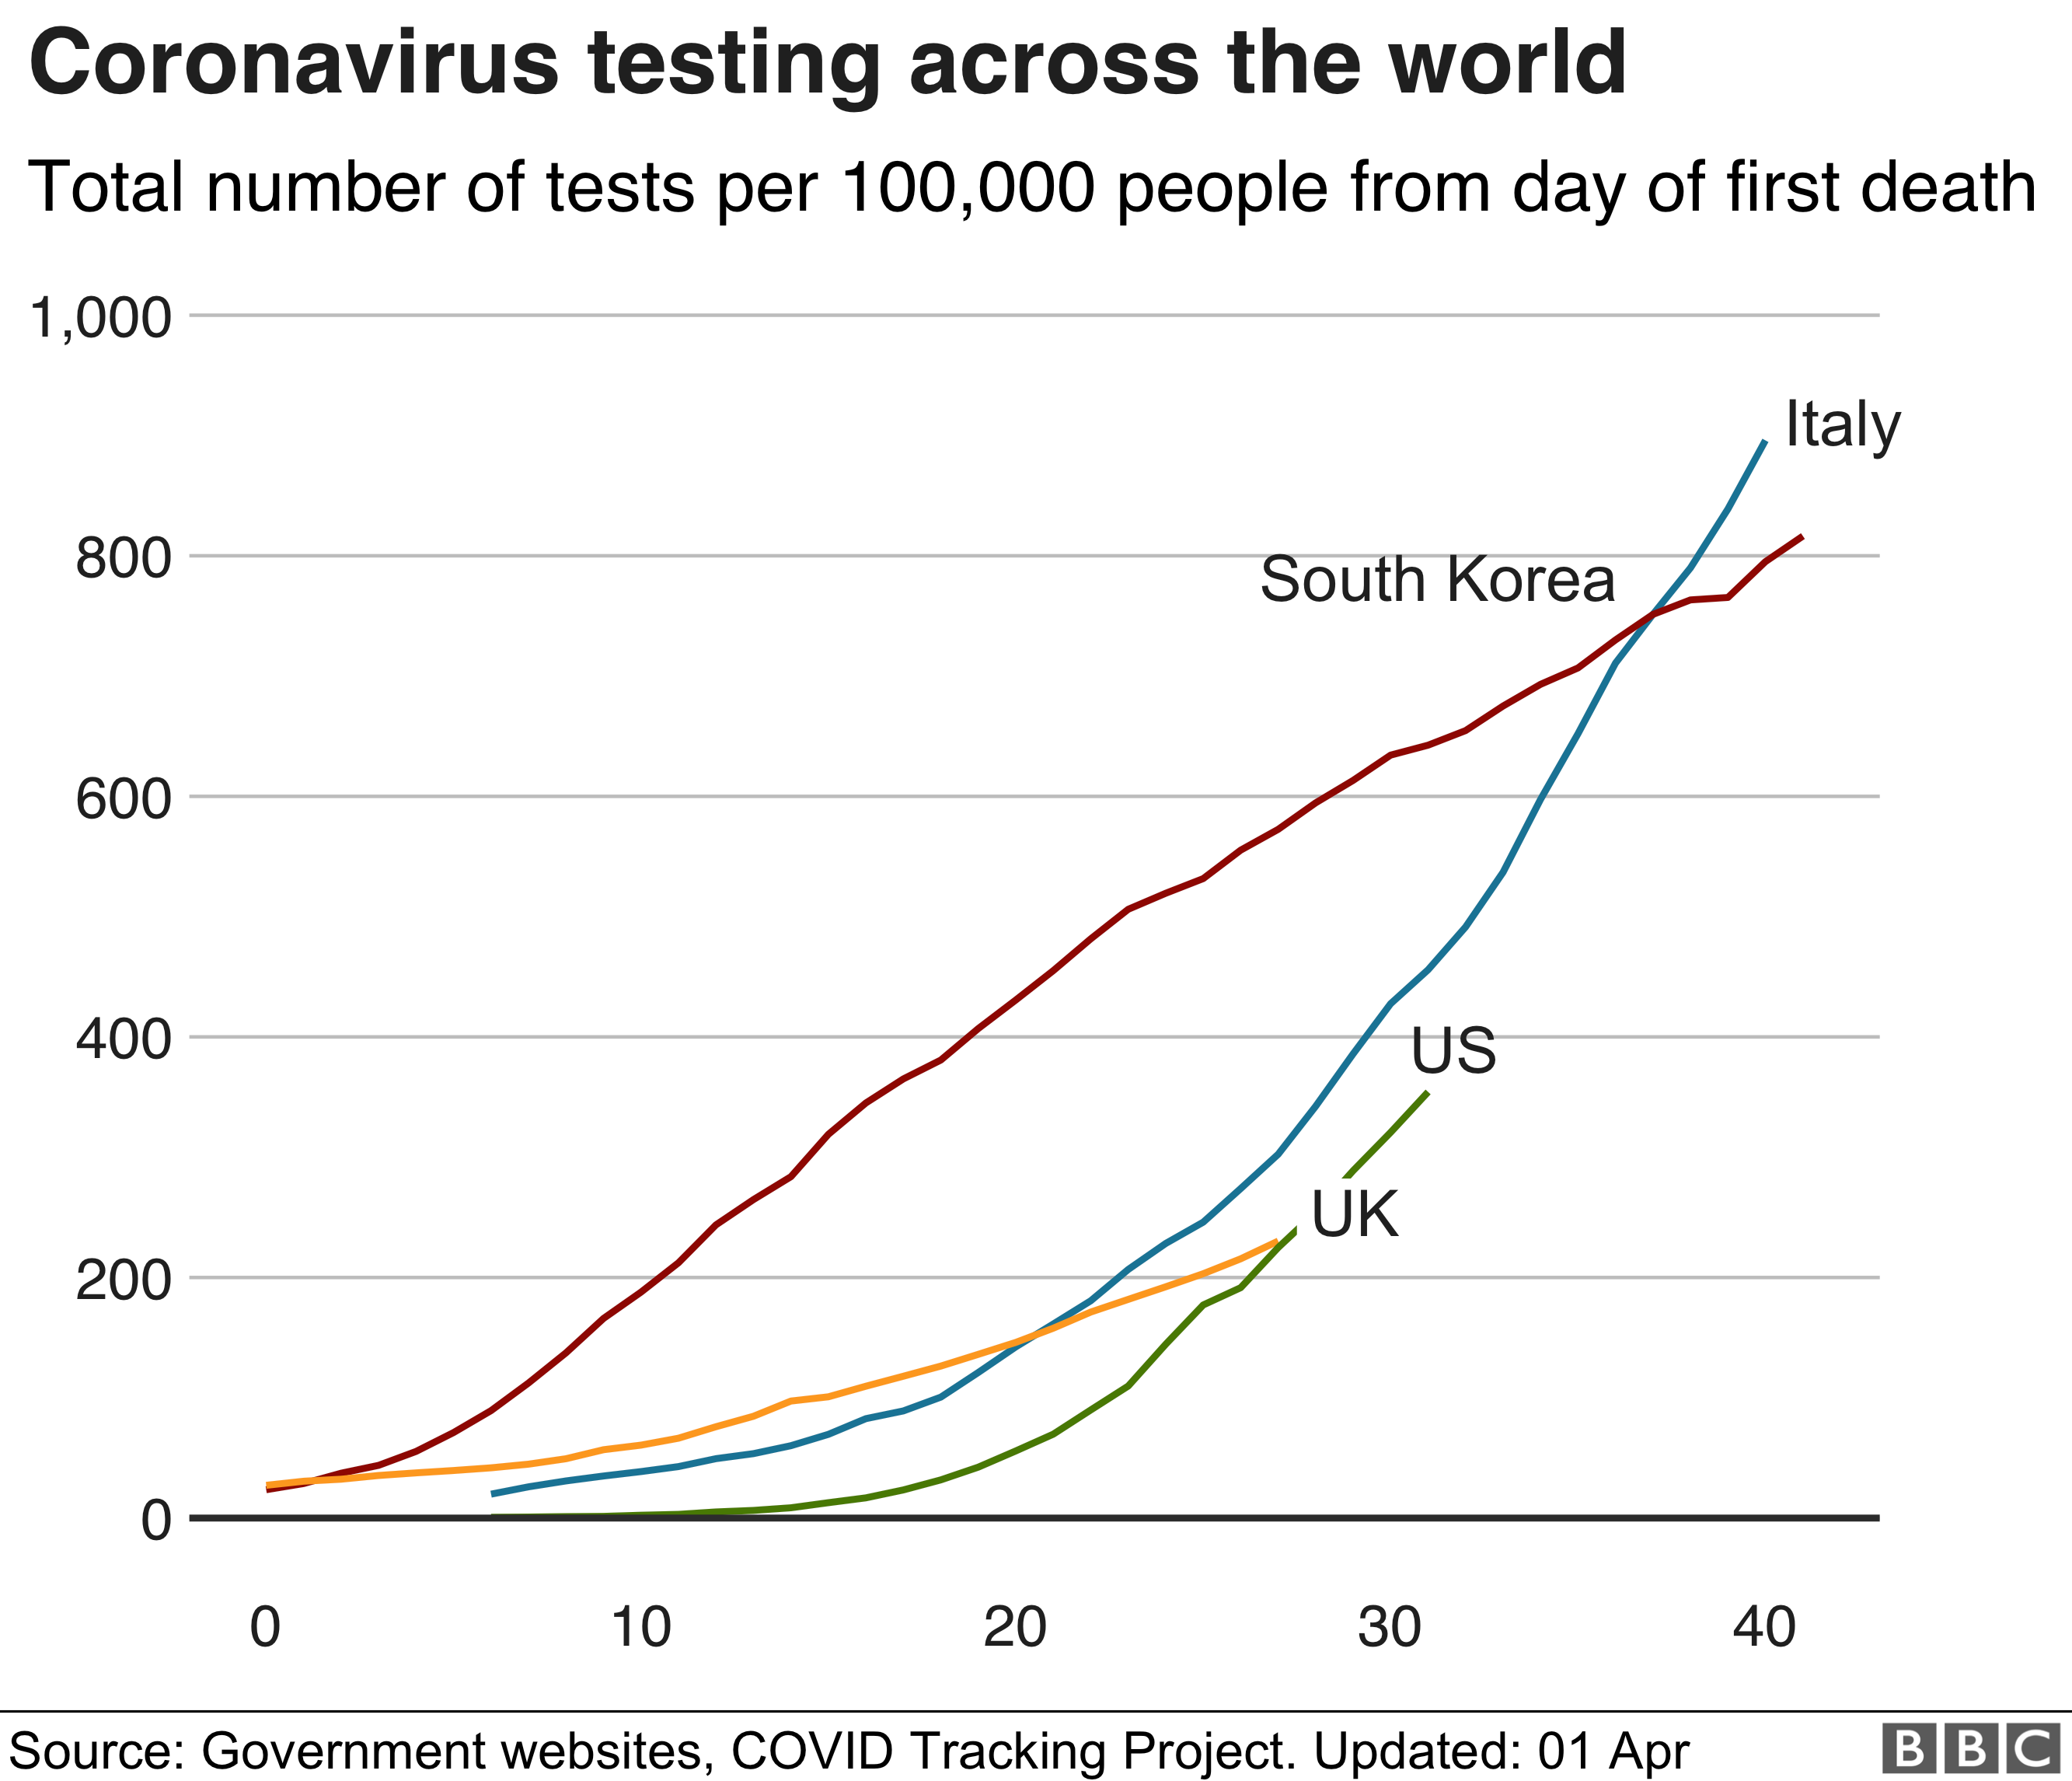 Coronavirus testing across the world Q1 April